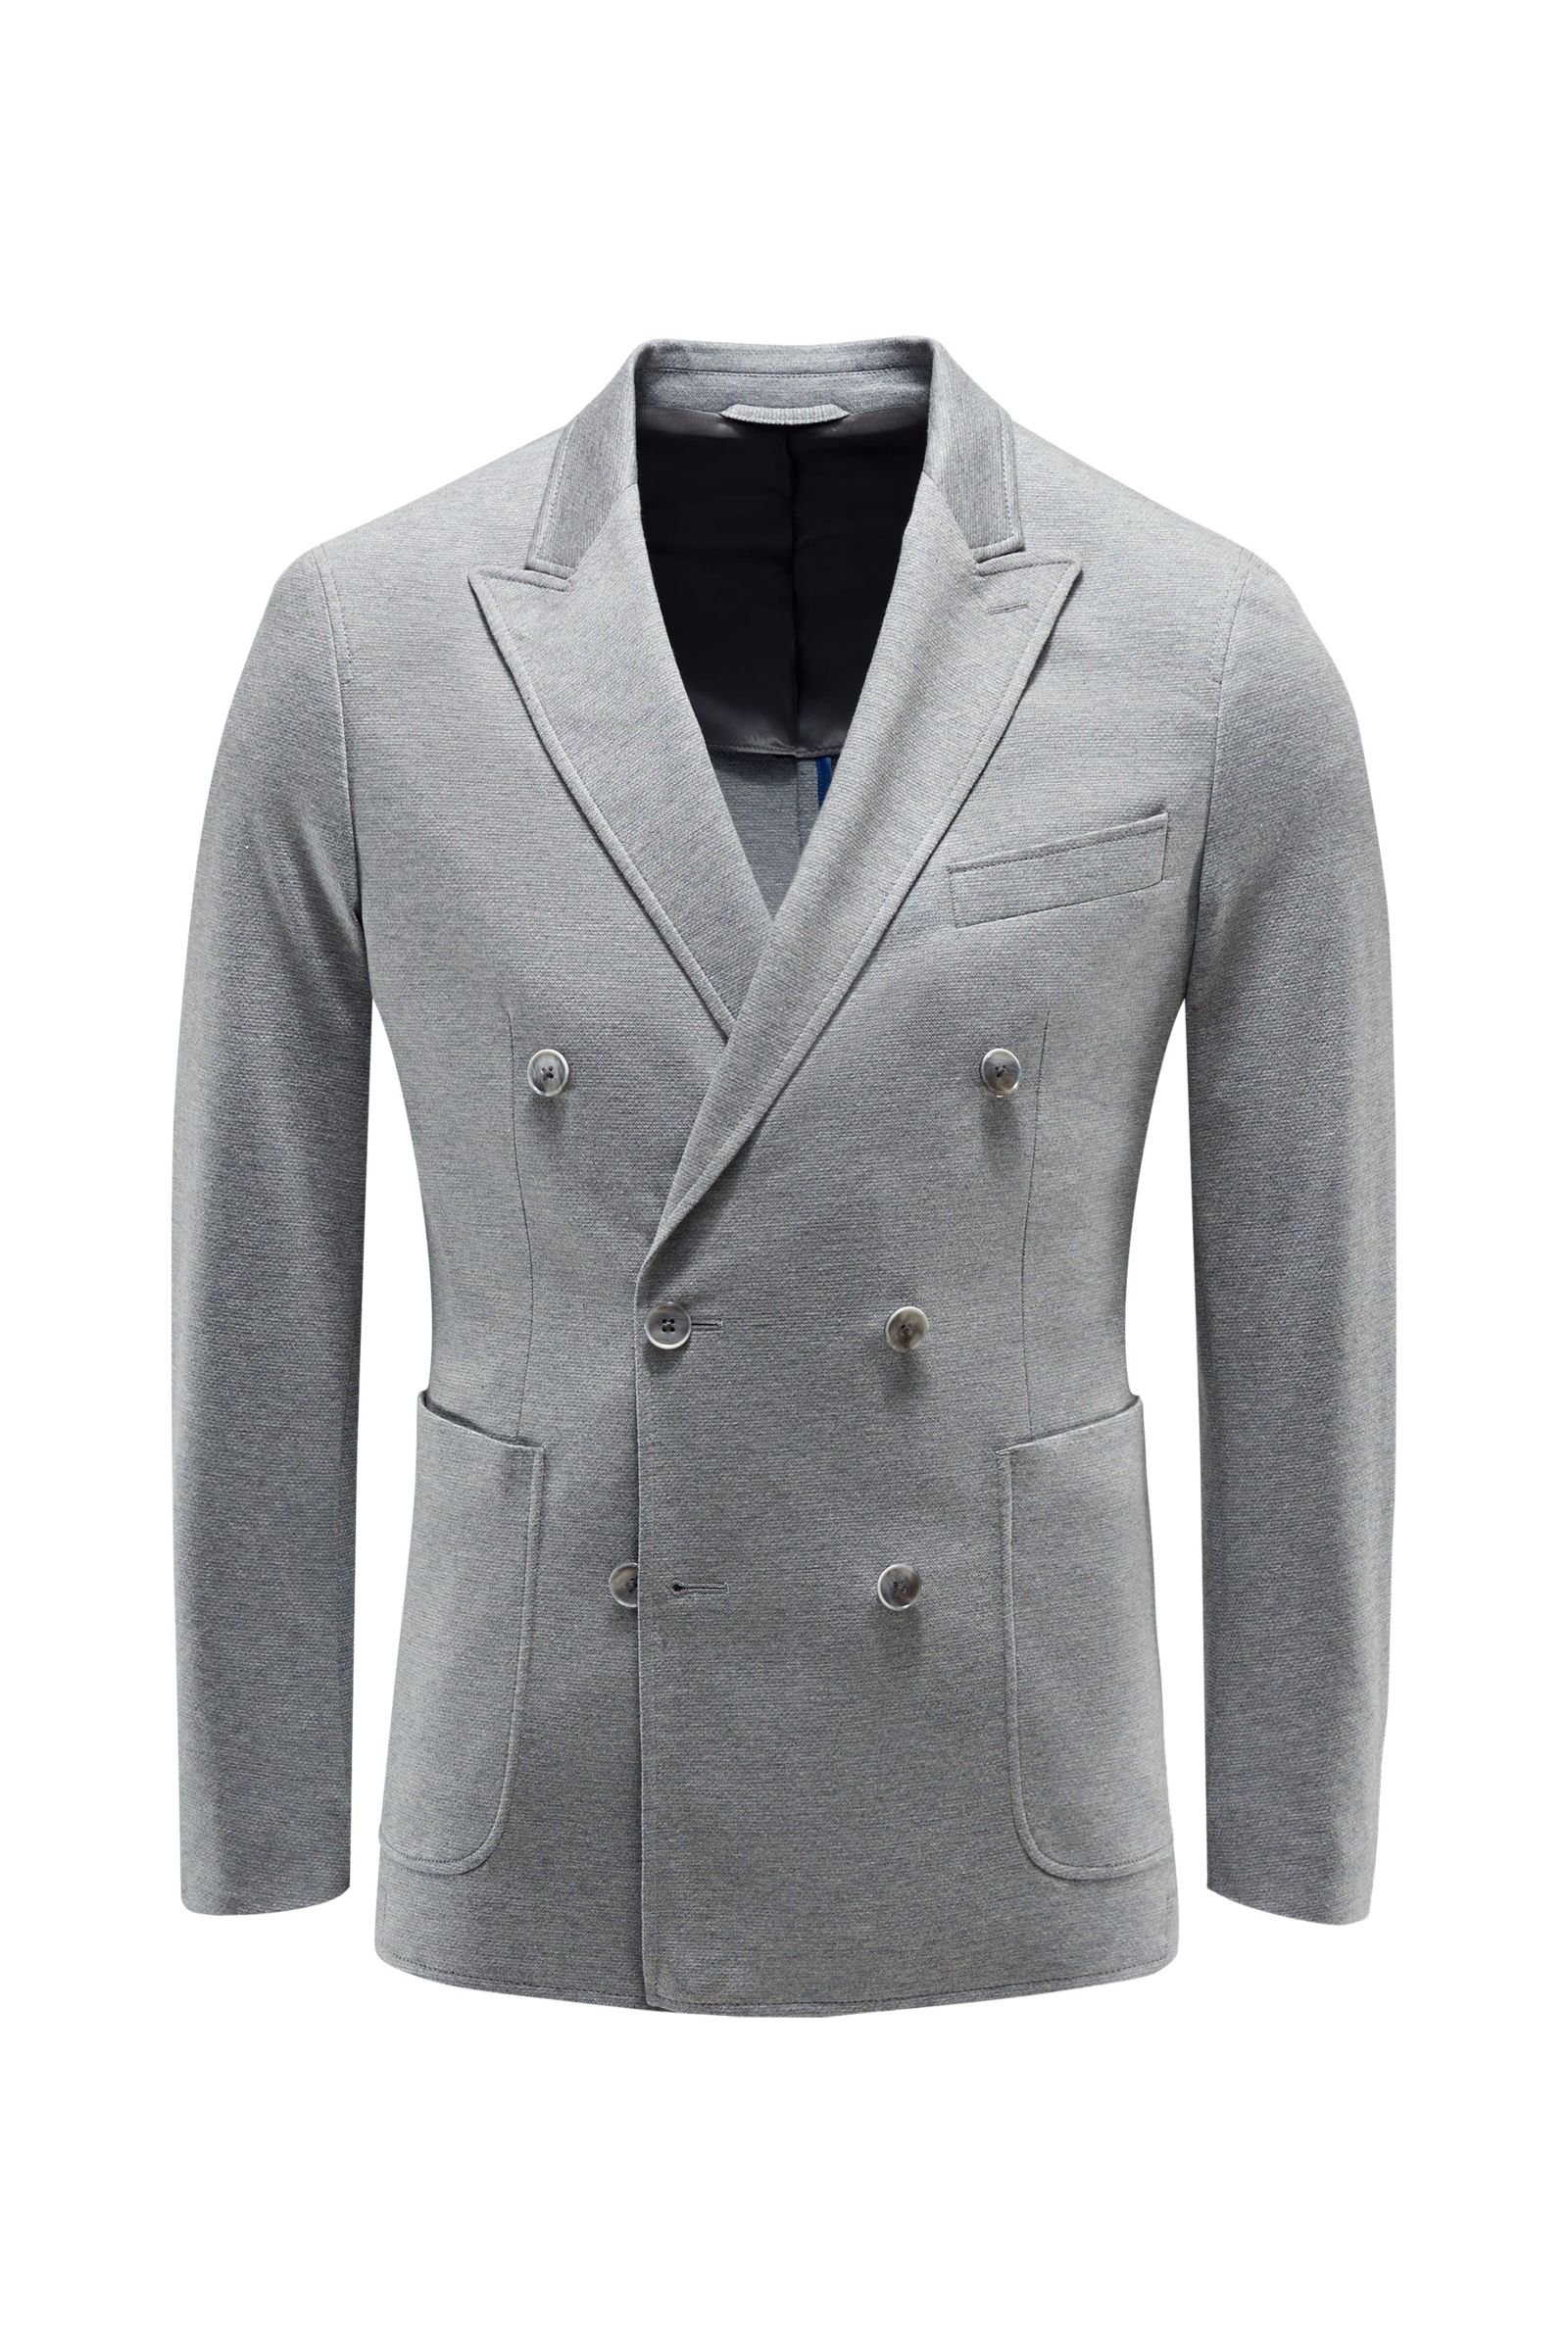 Jersey jacket light grey